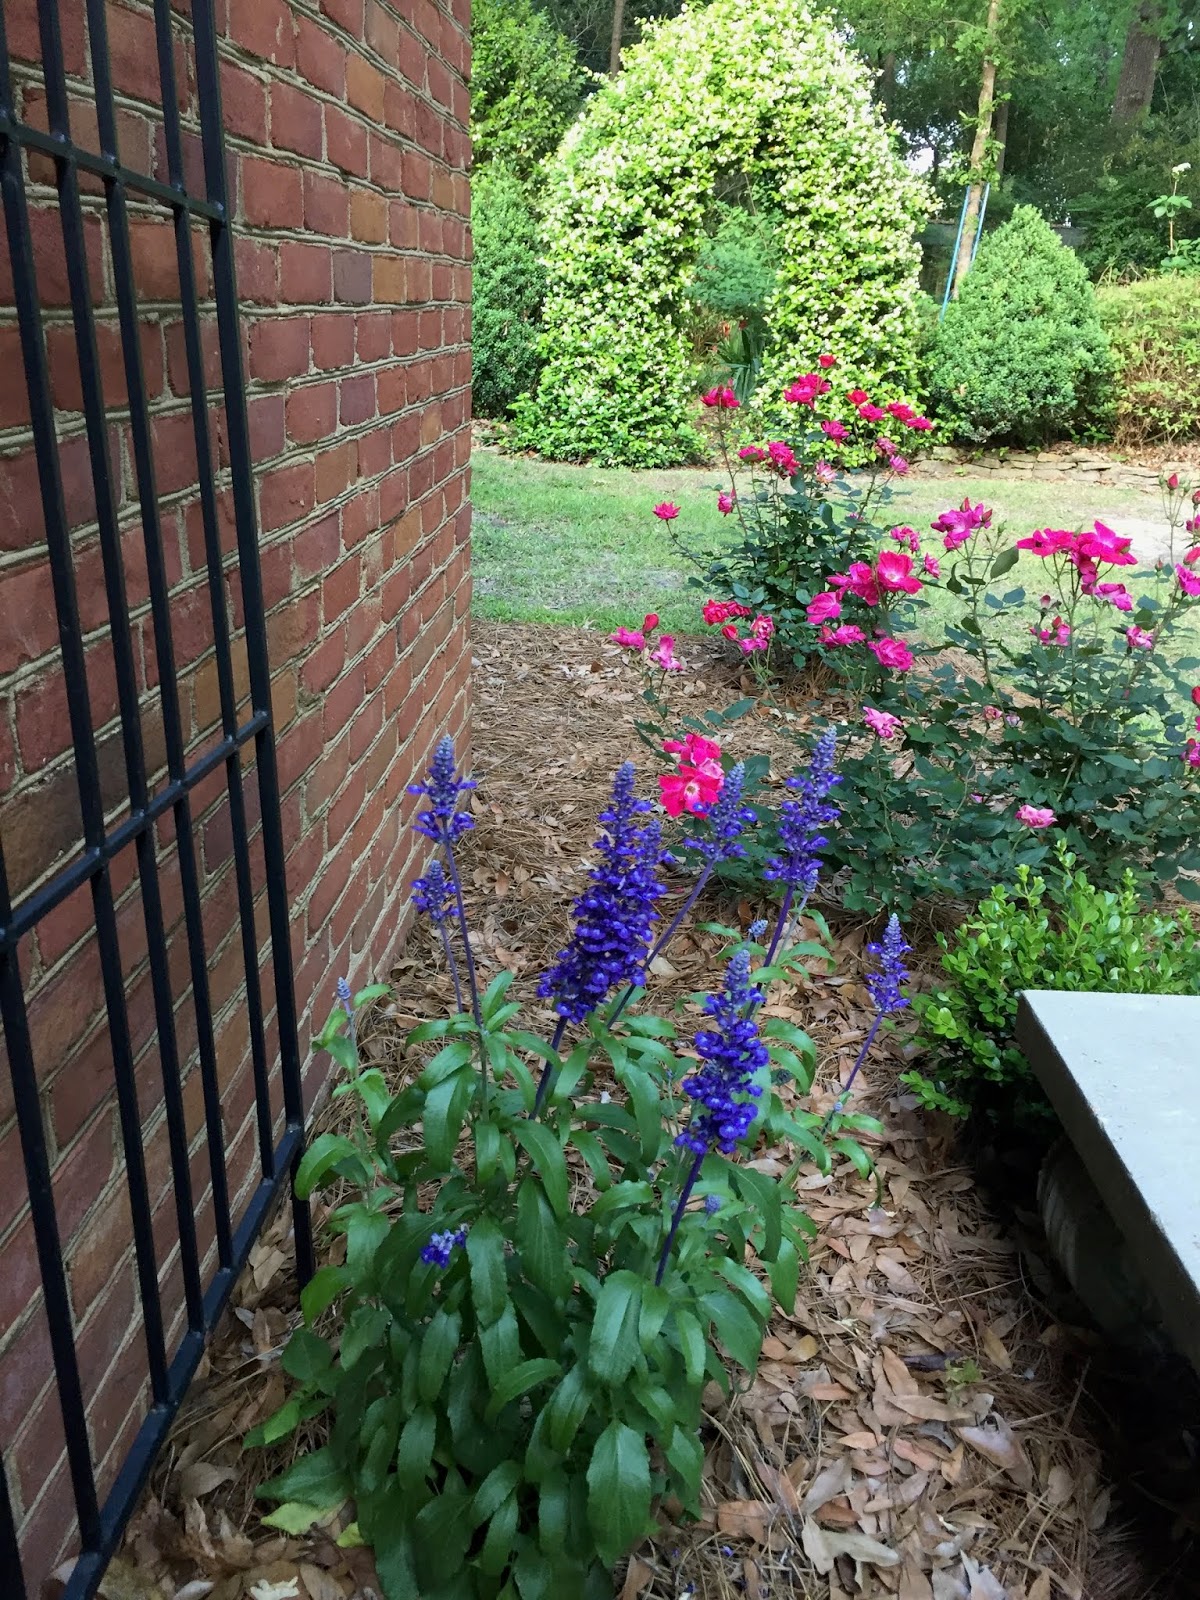 Prune Hydrangeas Now For Flowers Next Summer